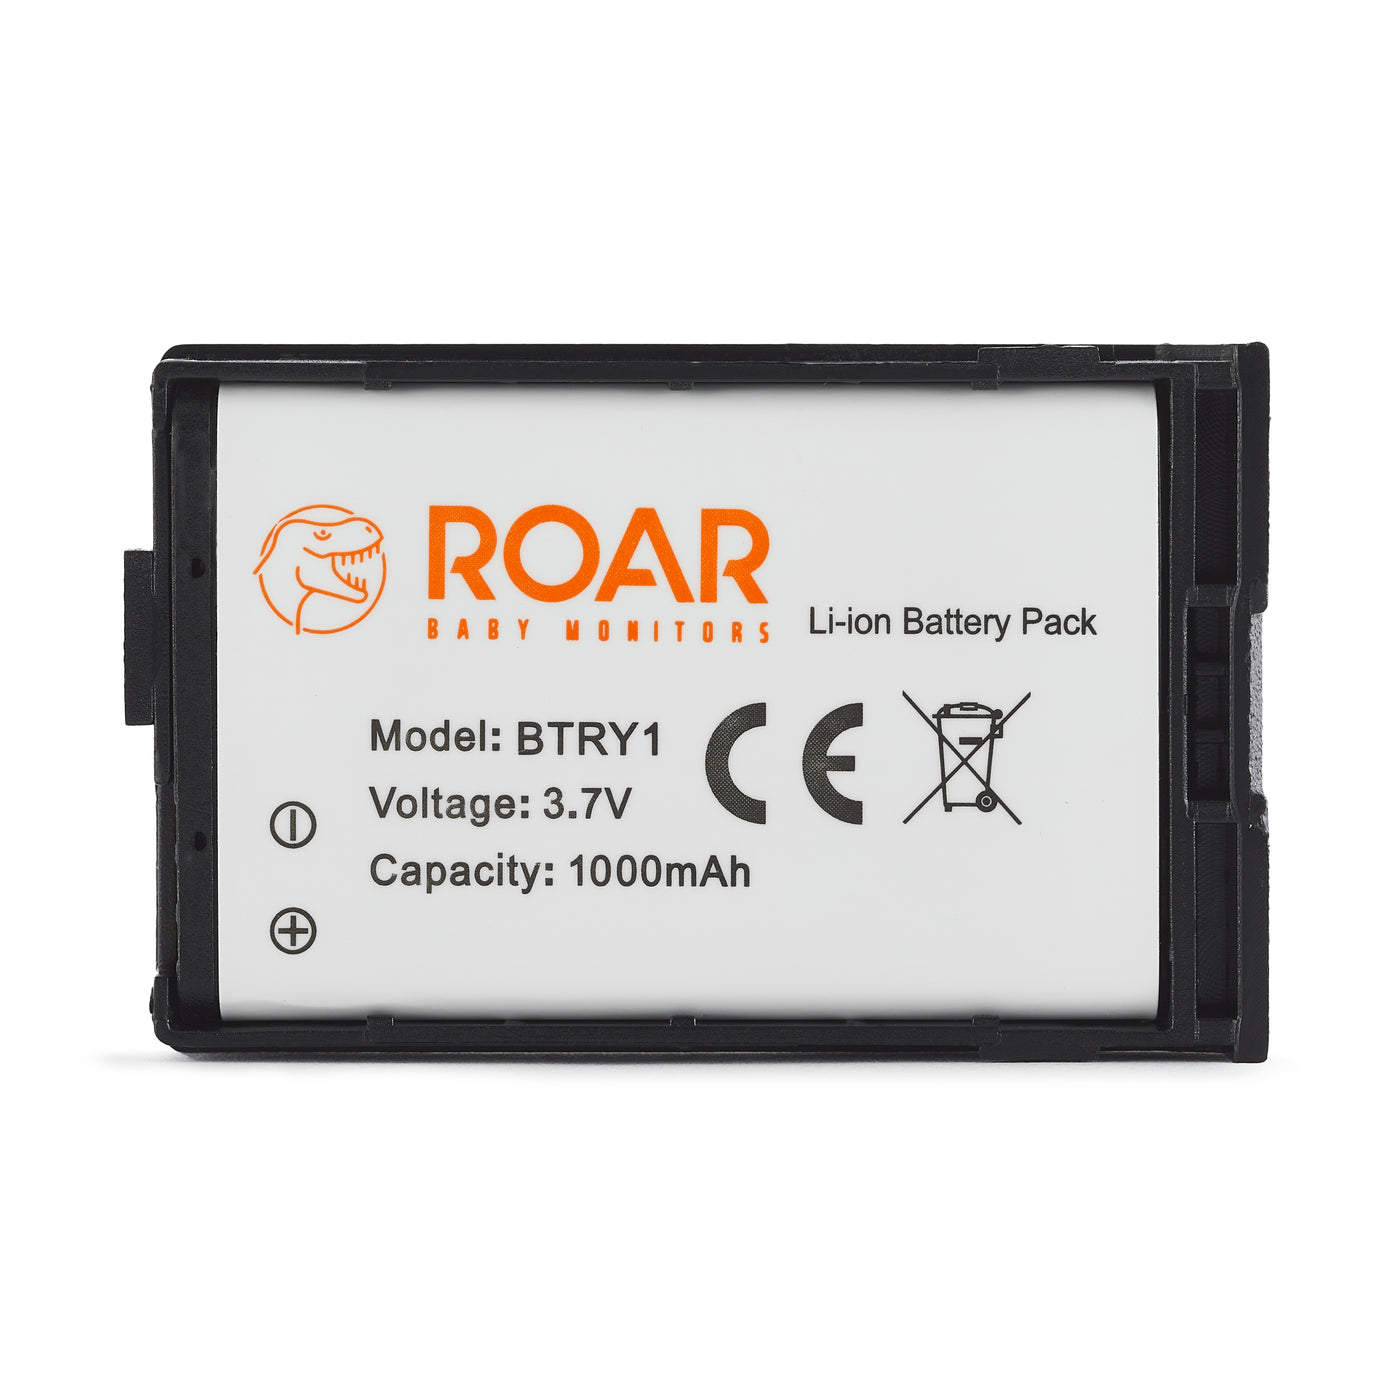 Roar Baby Monitor Extra Battery